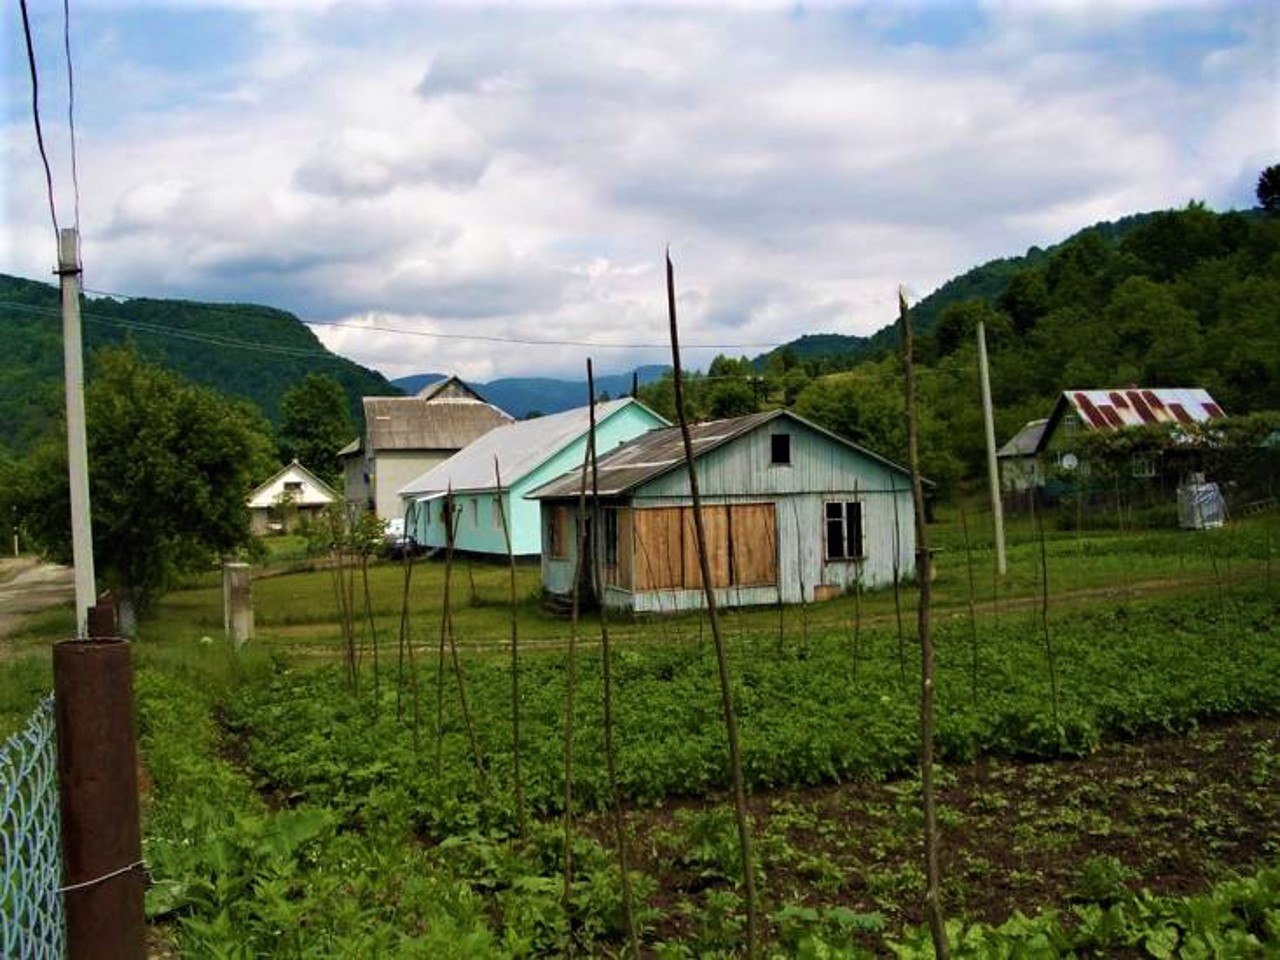 Mala Uholka village